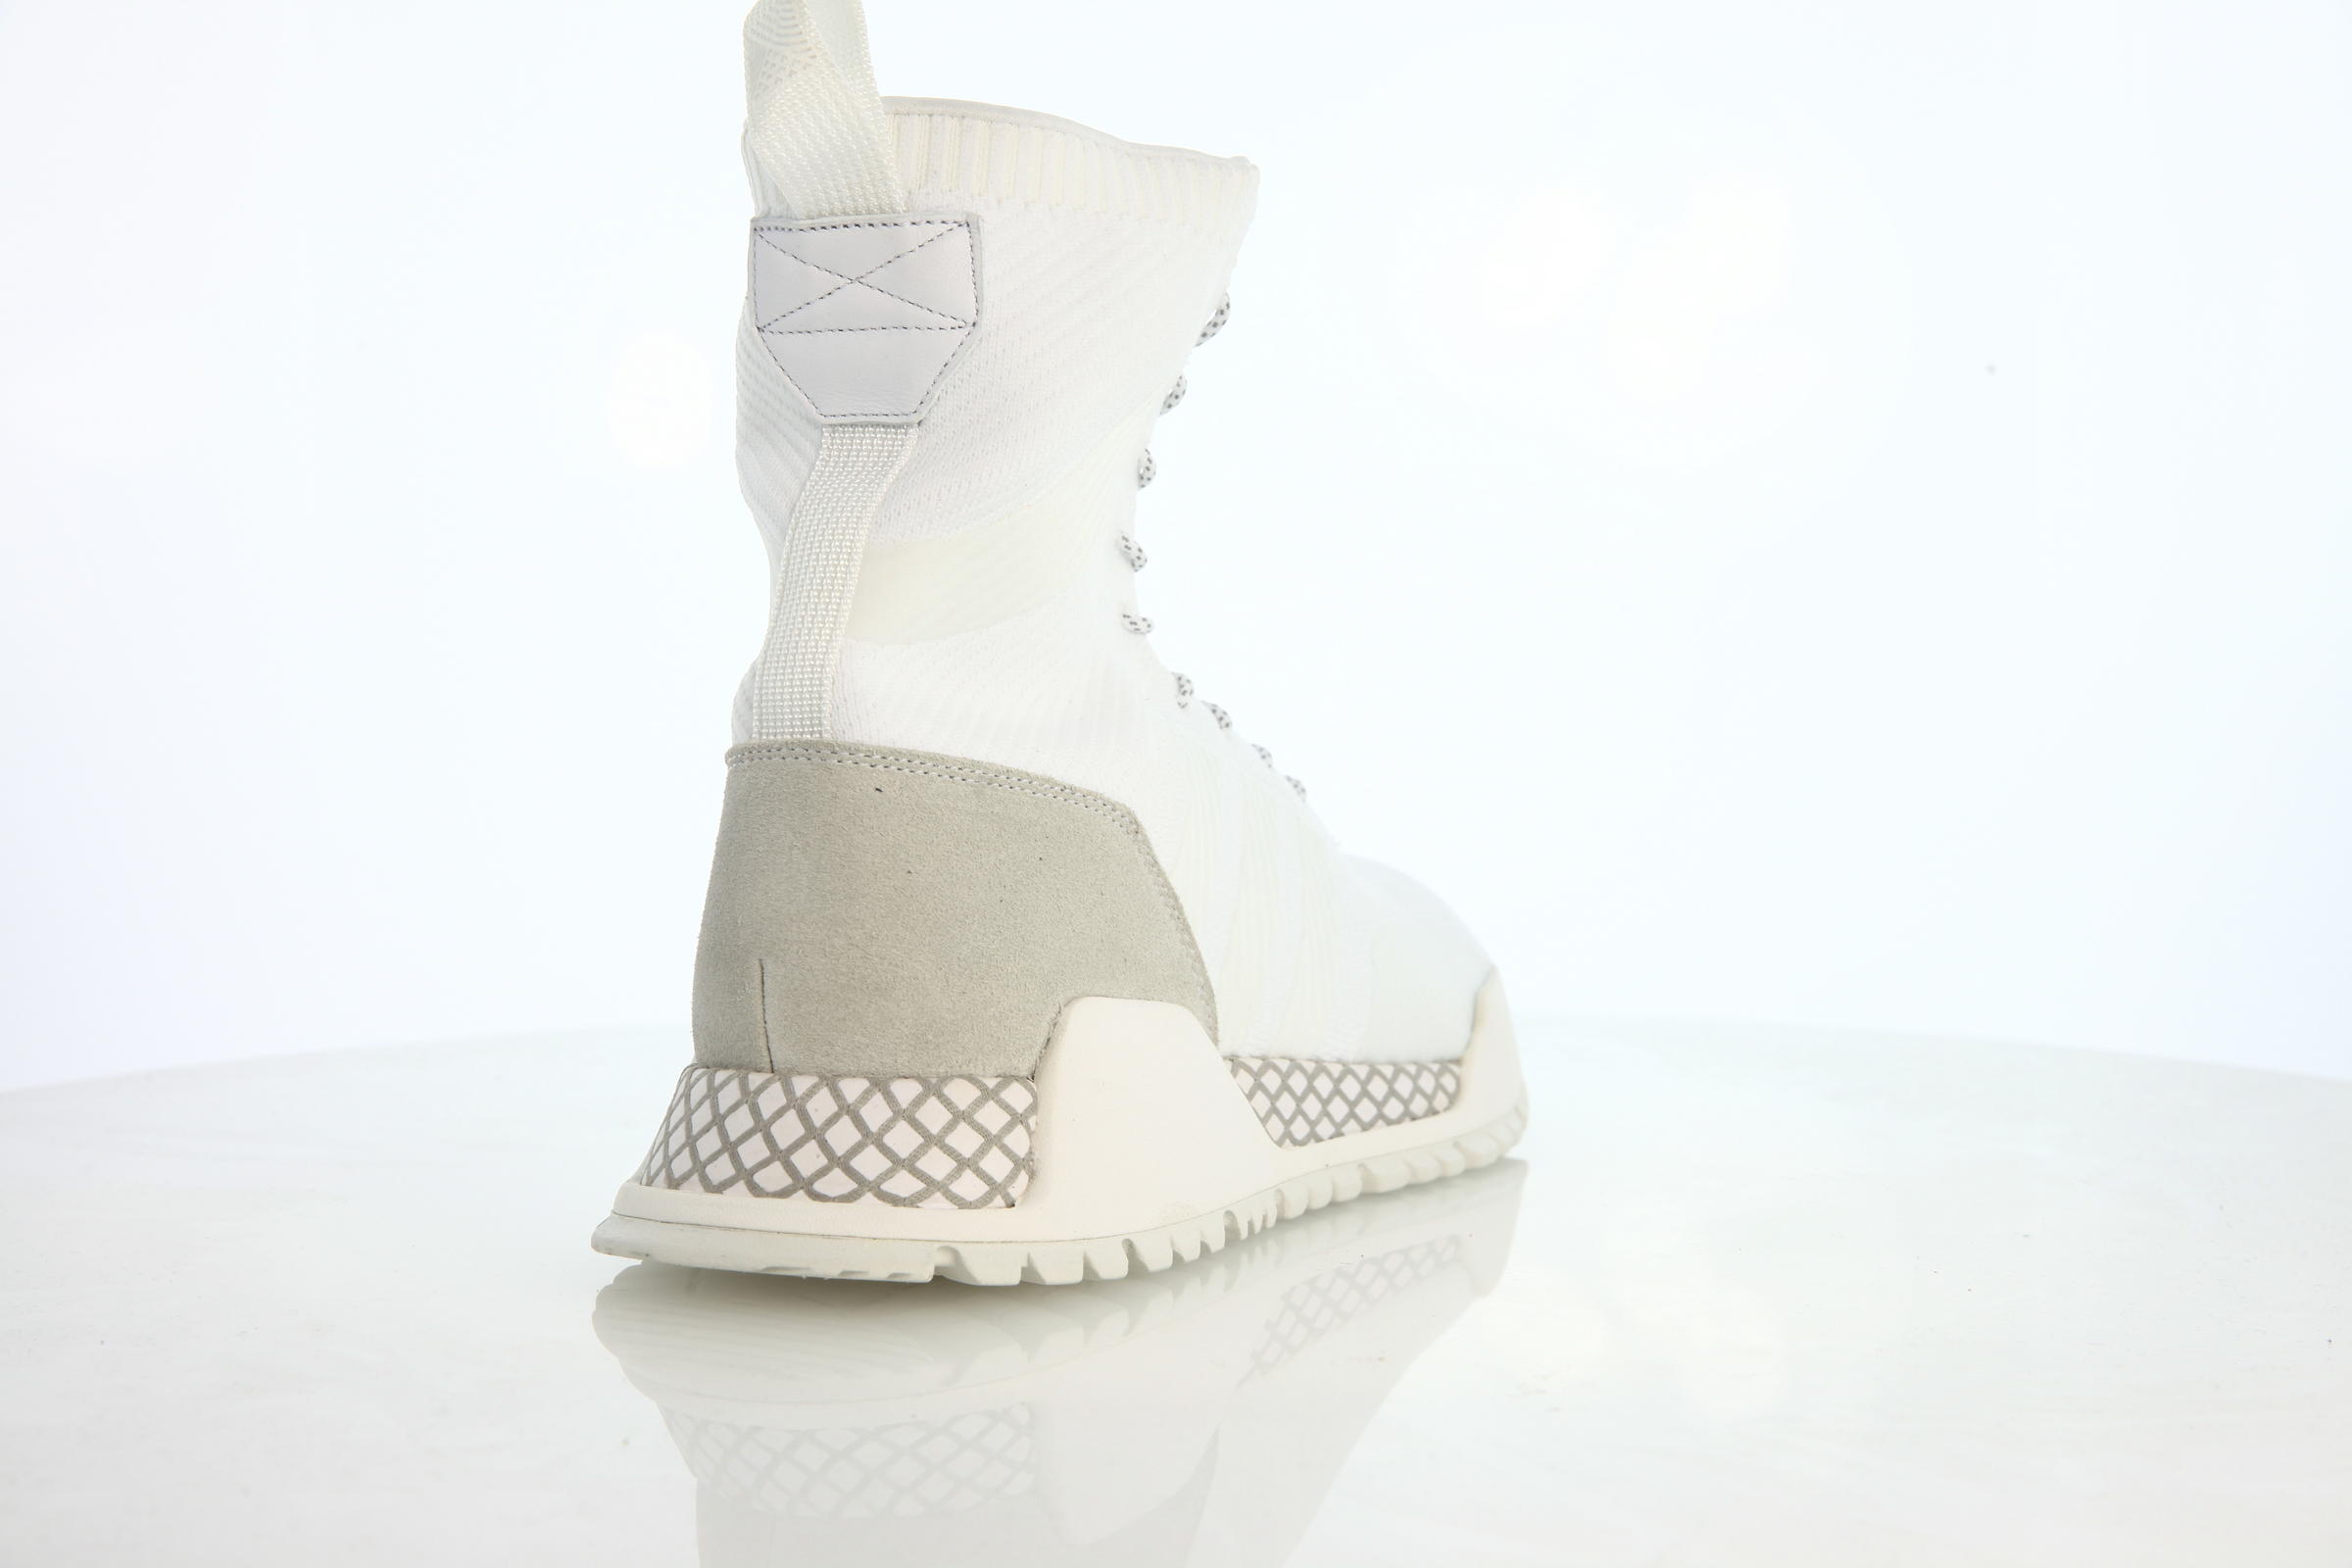 adidas Originals Winter A.F./1.3 Primeknit "White"